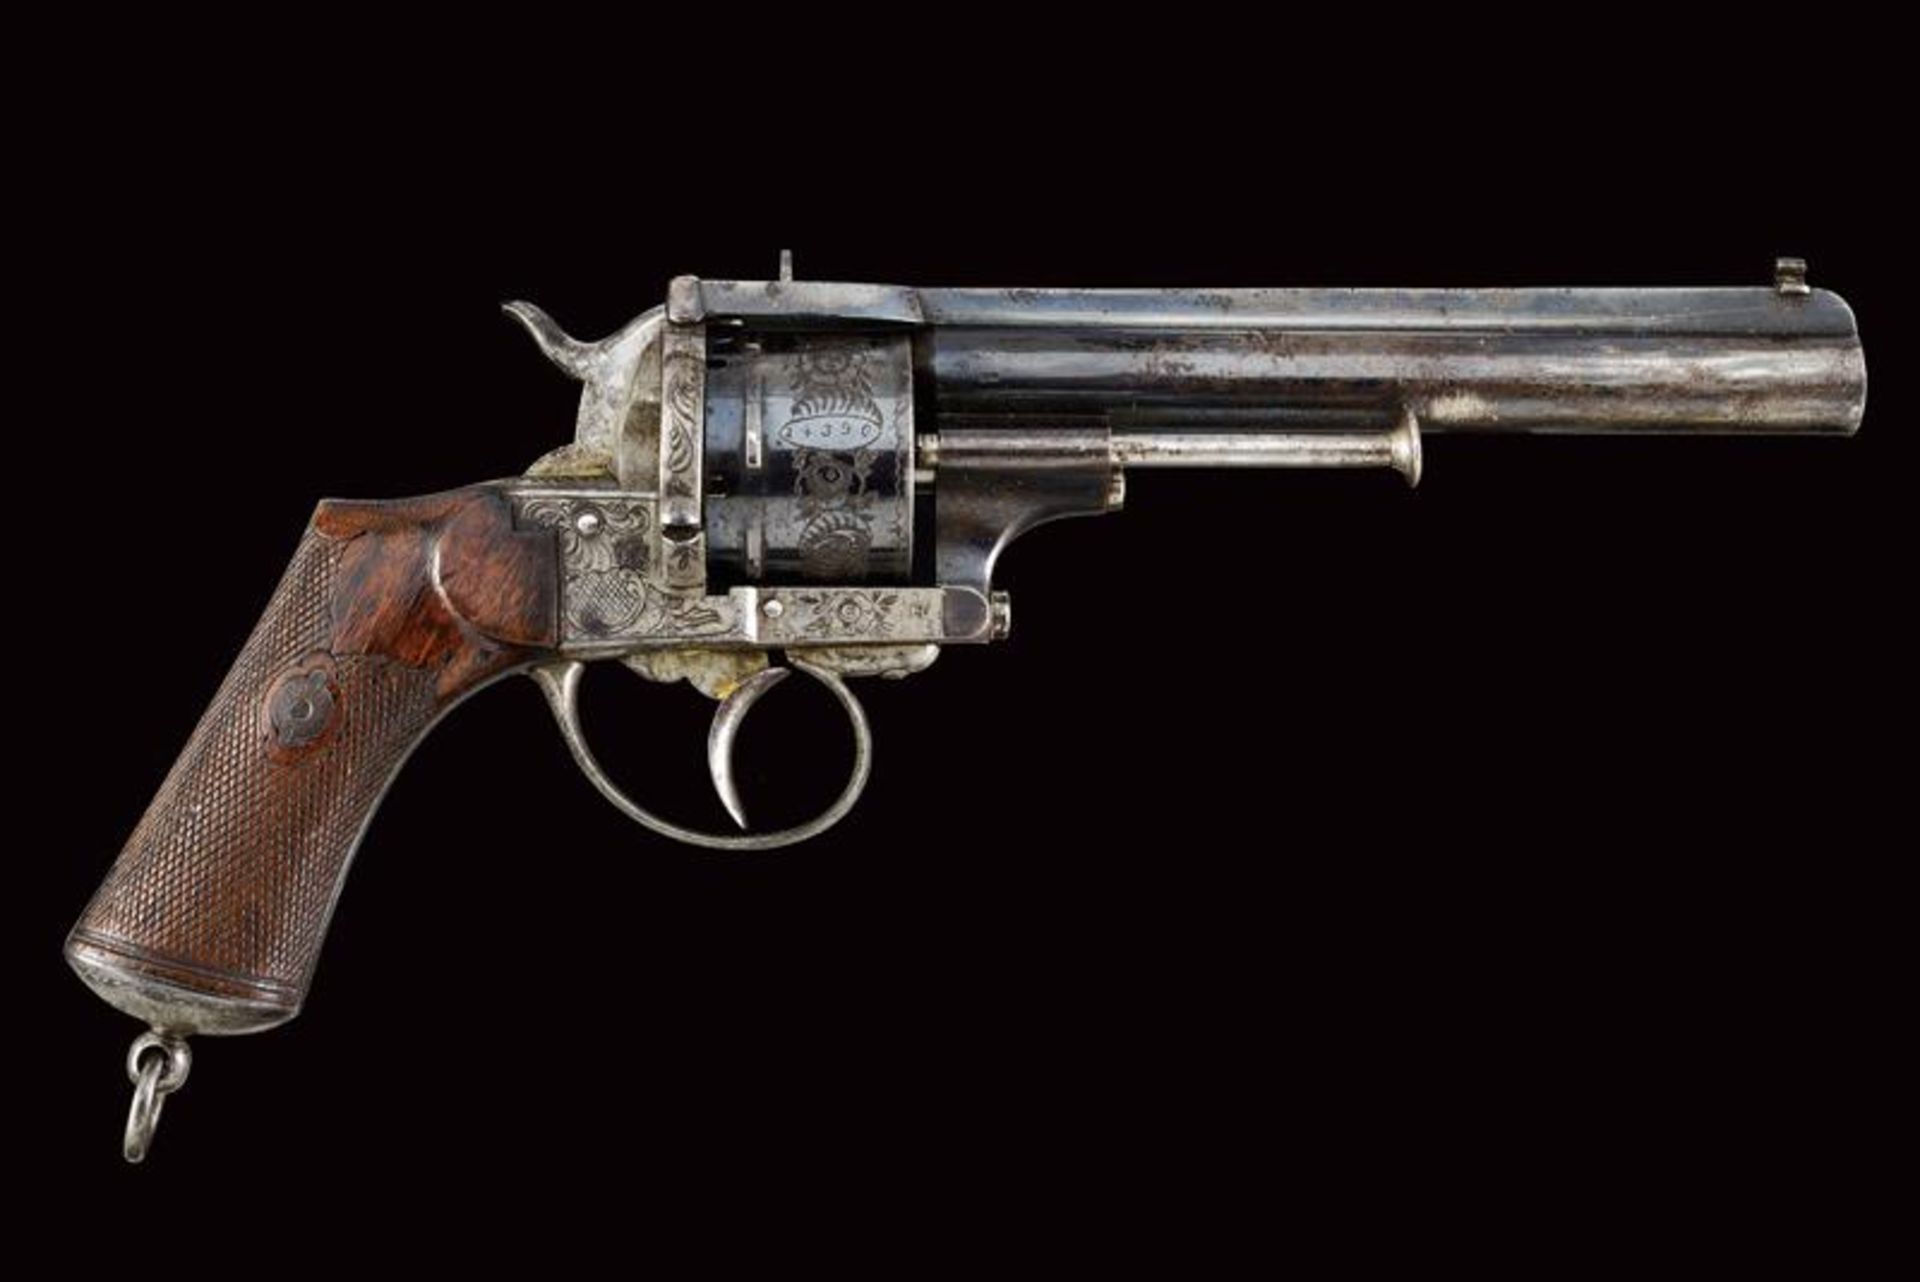 A fine Lefaucheux pin fire revolver